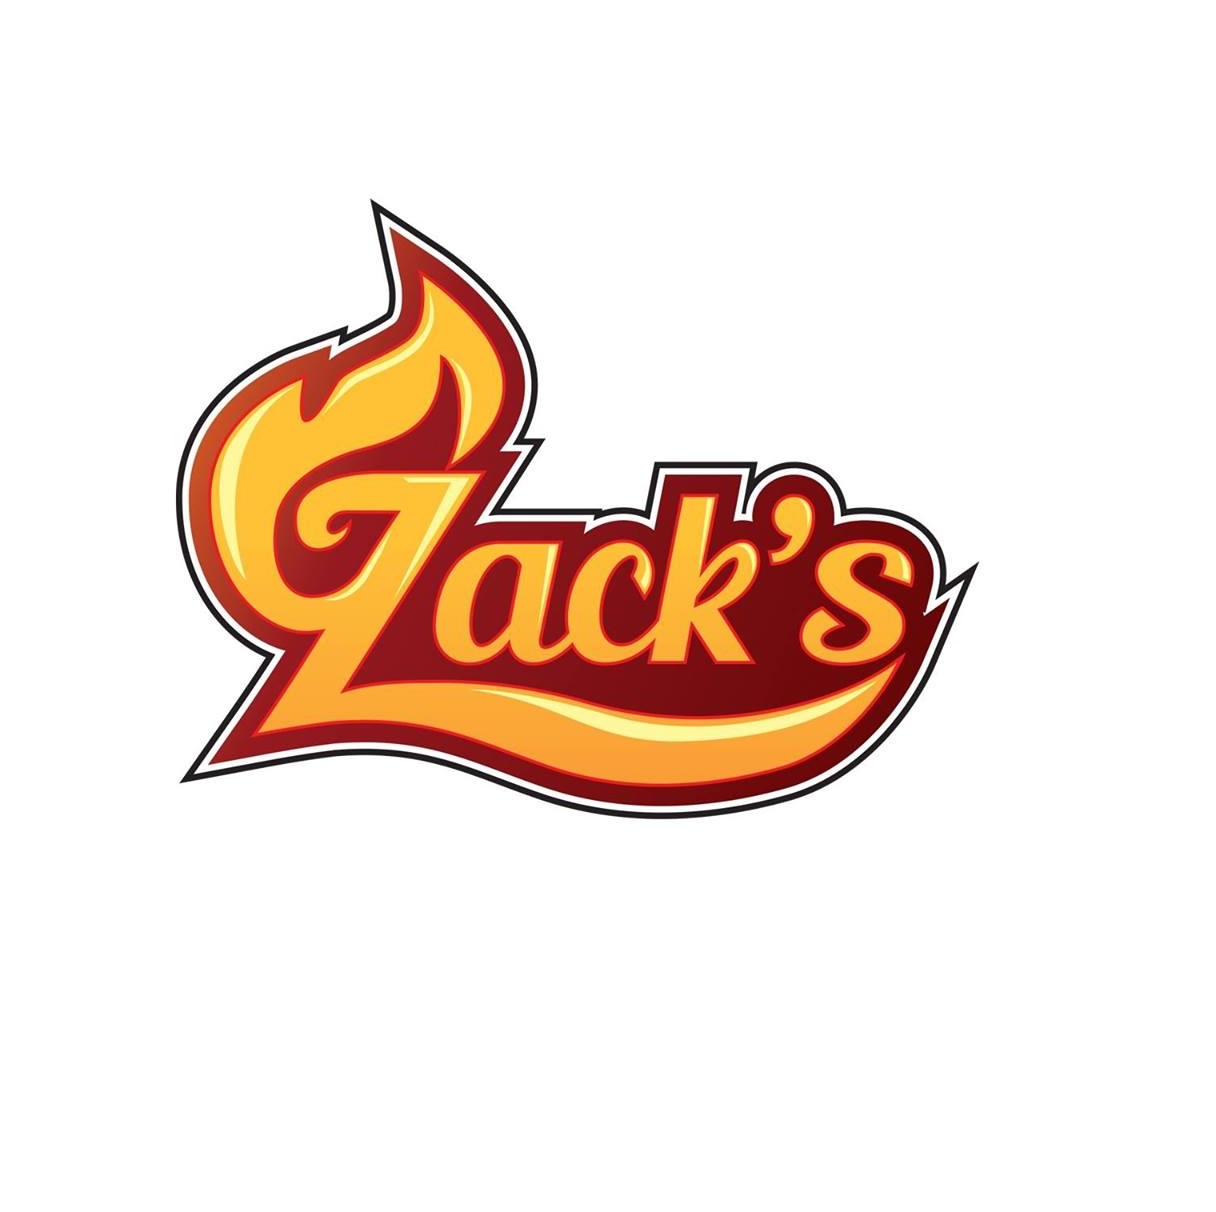 Zacks Fried Chicken